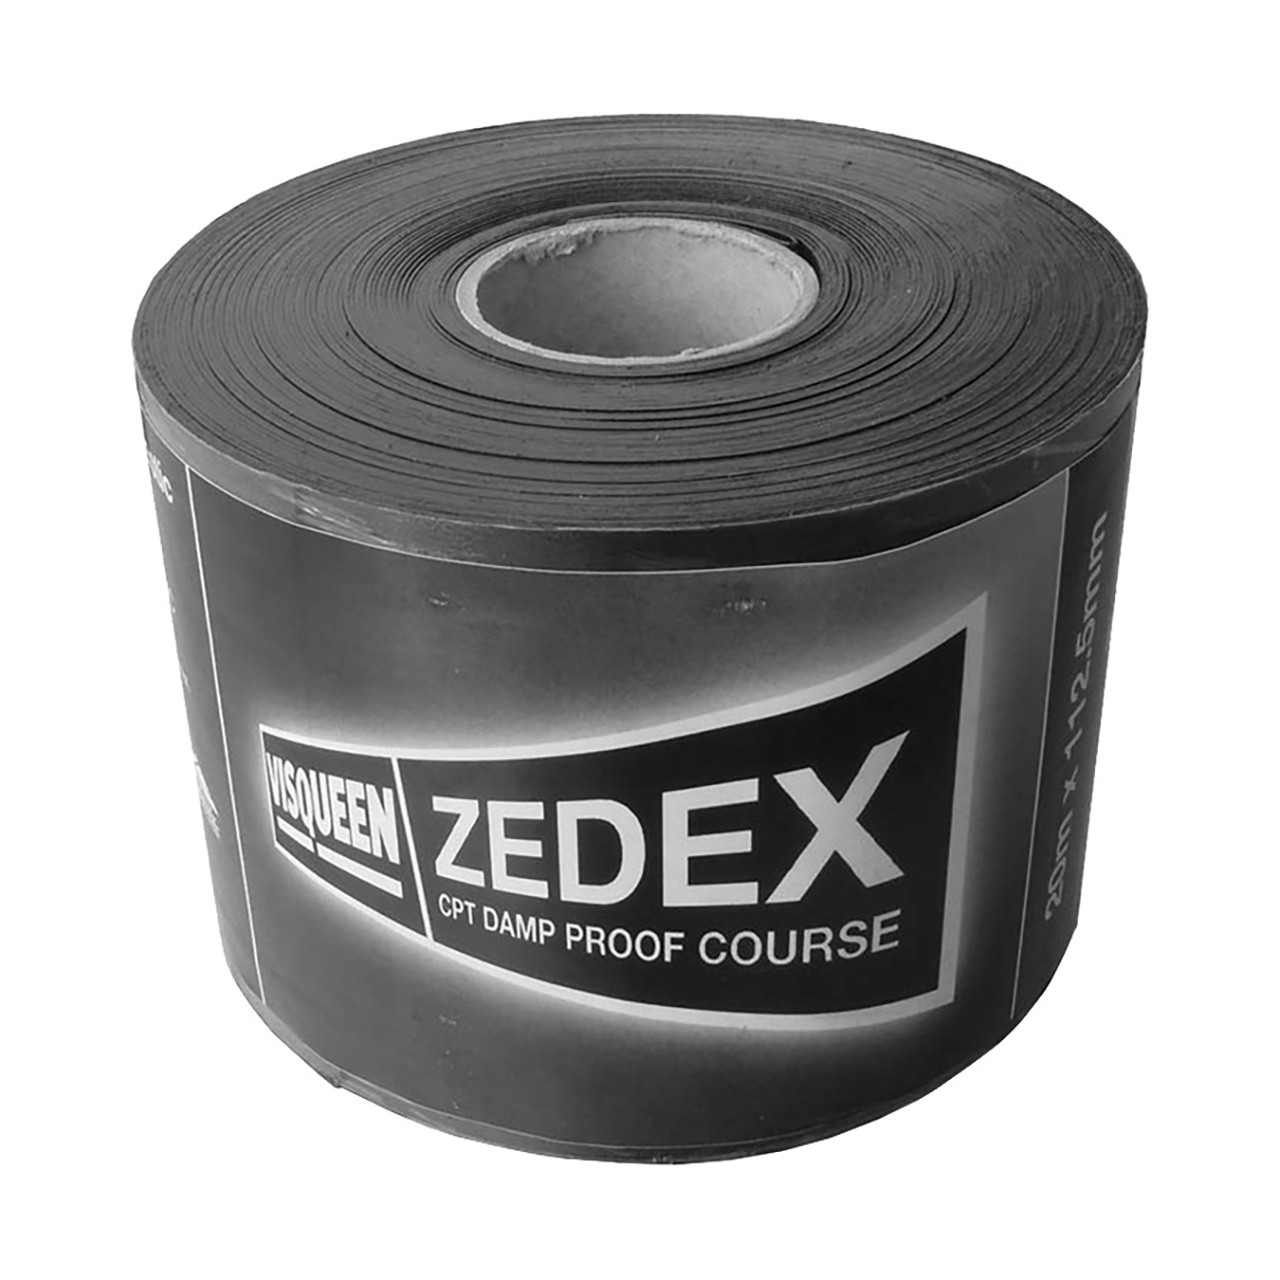 Photograph of Zedex High Performance Damp Proof Course 150mm x 20m